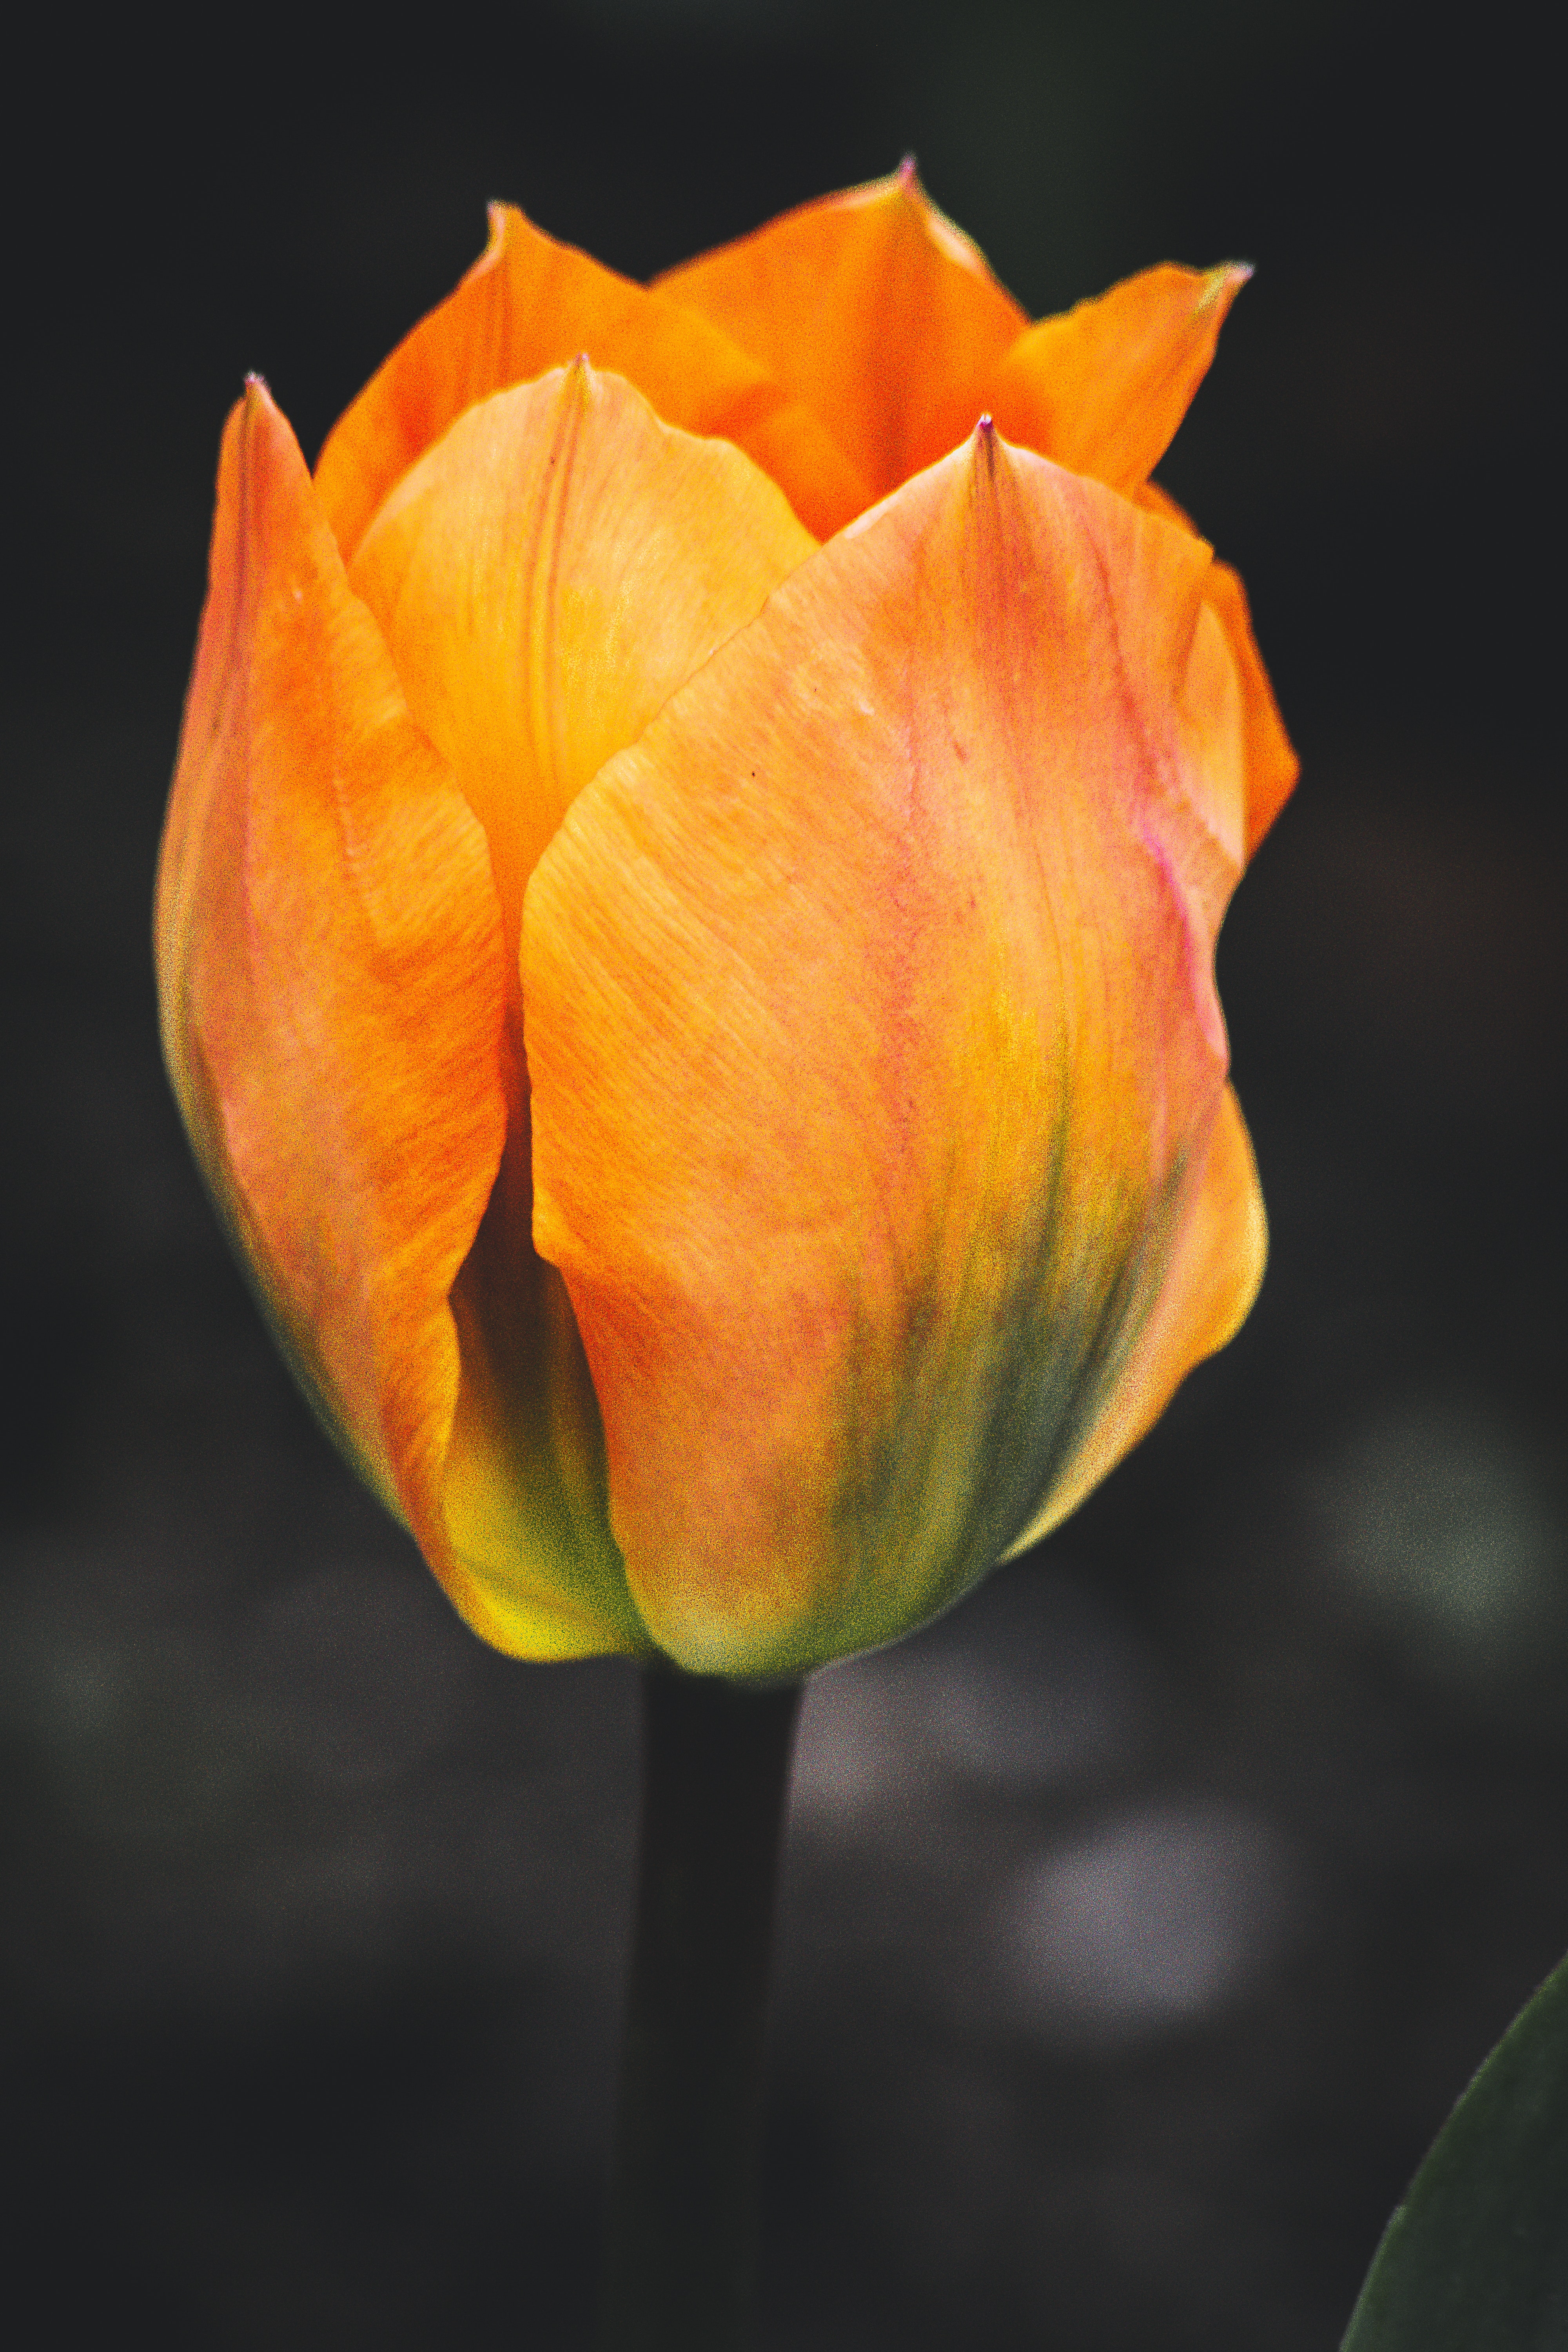 Selective Focus Photography of Orange Tulip Flower · Free Stock Photo